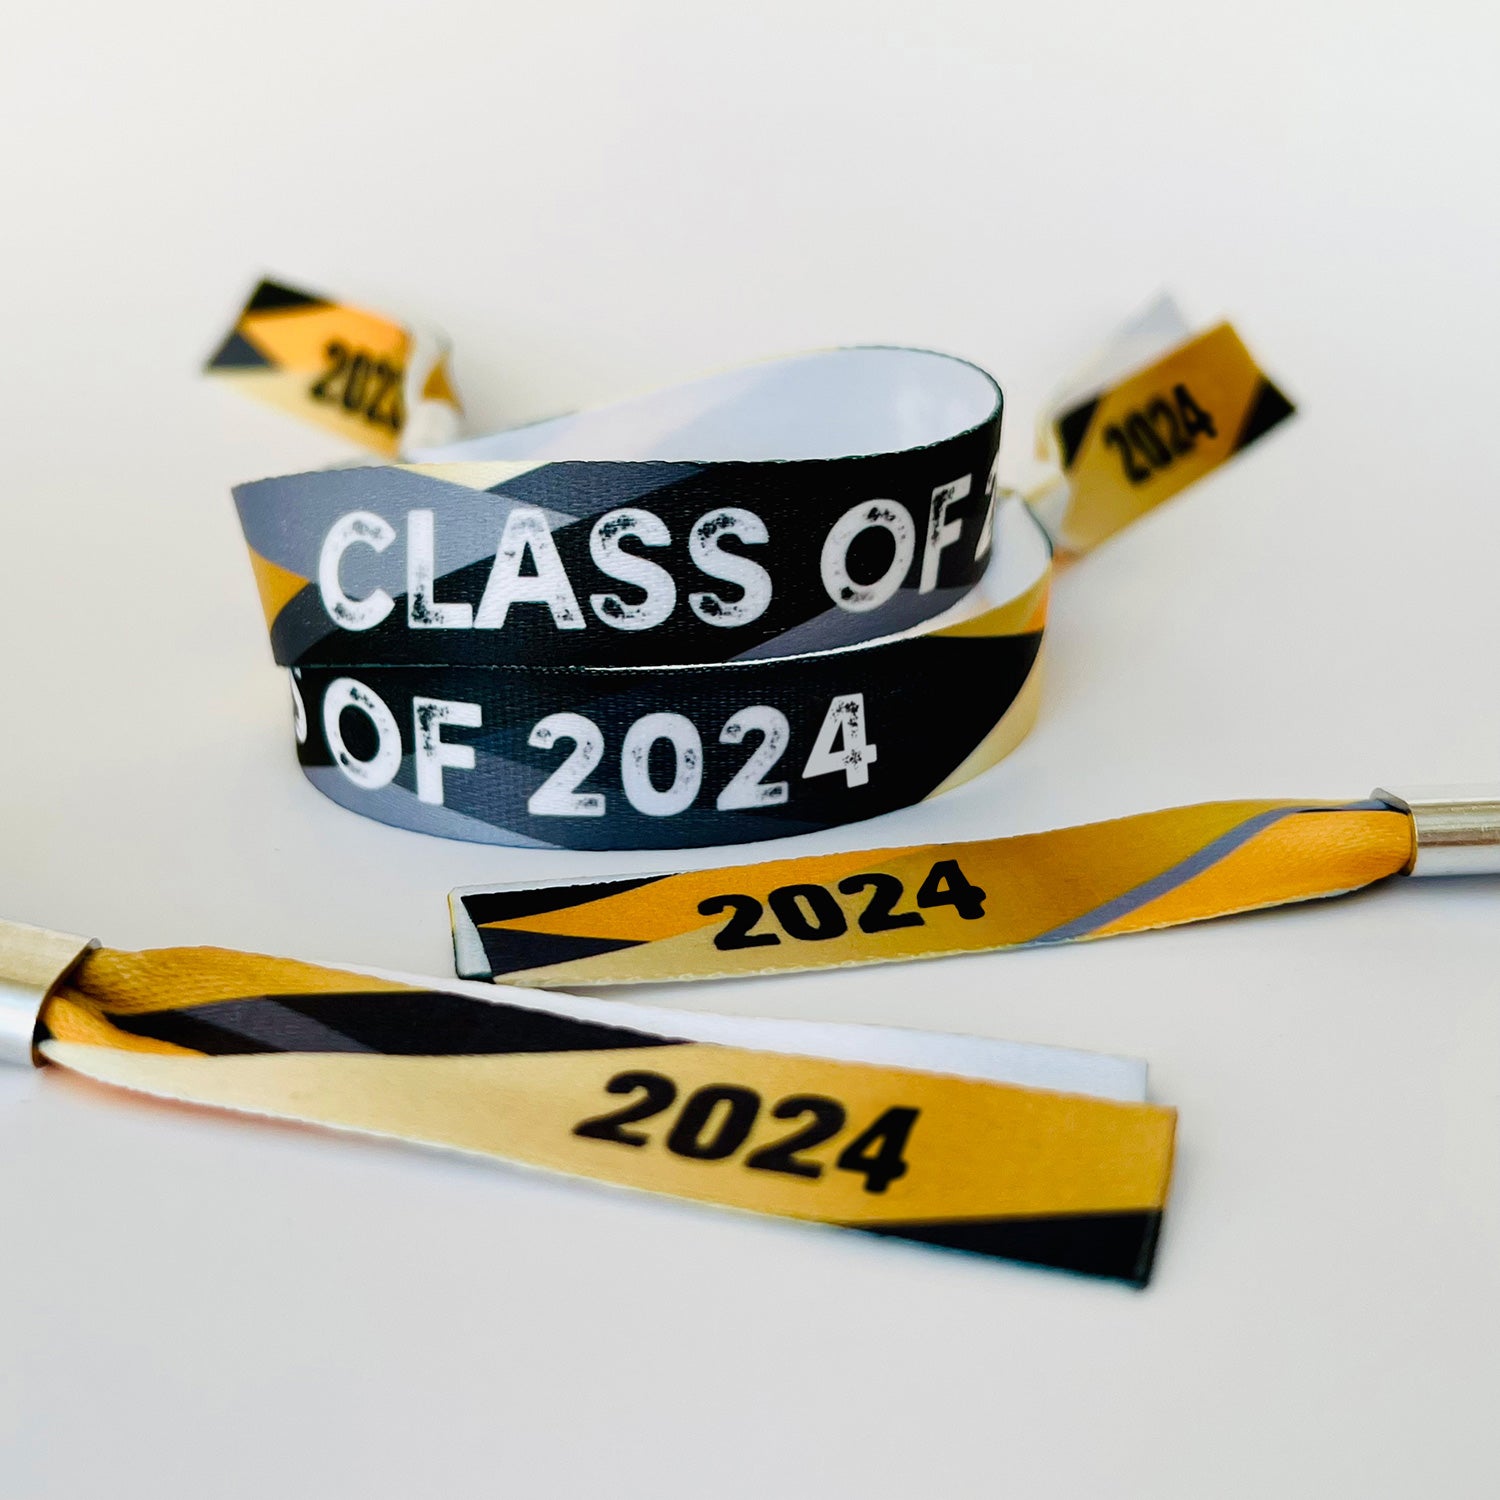 class of 2024 school leavers graduation wristbands